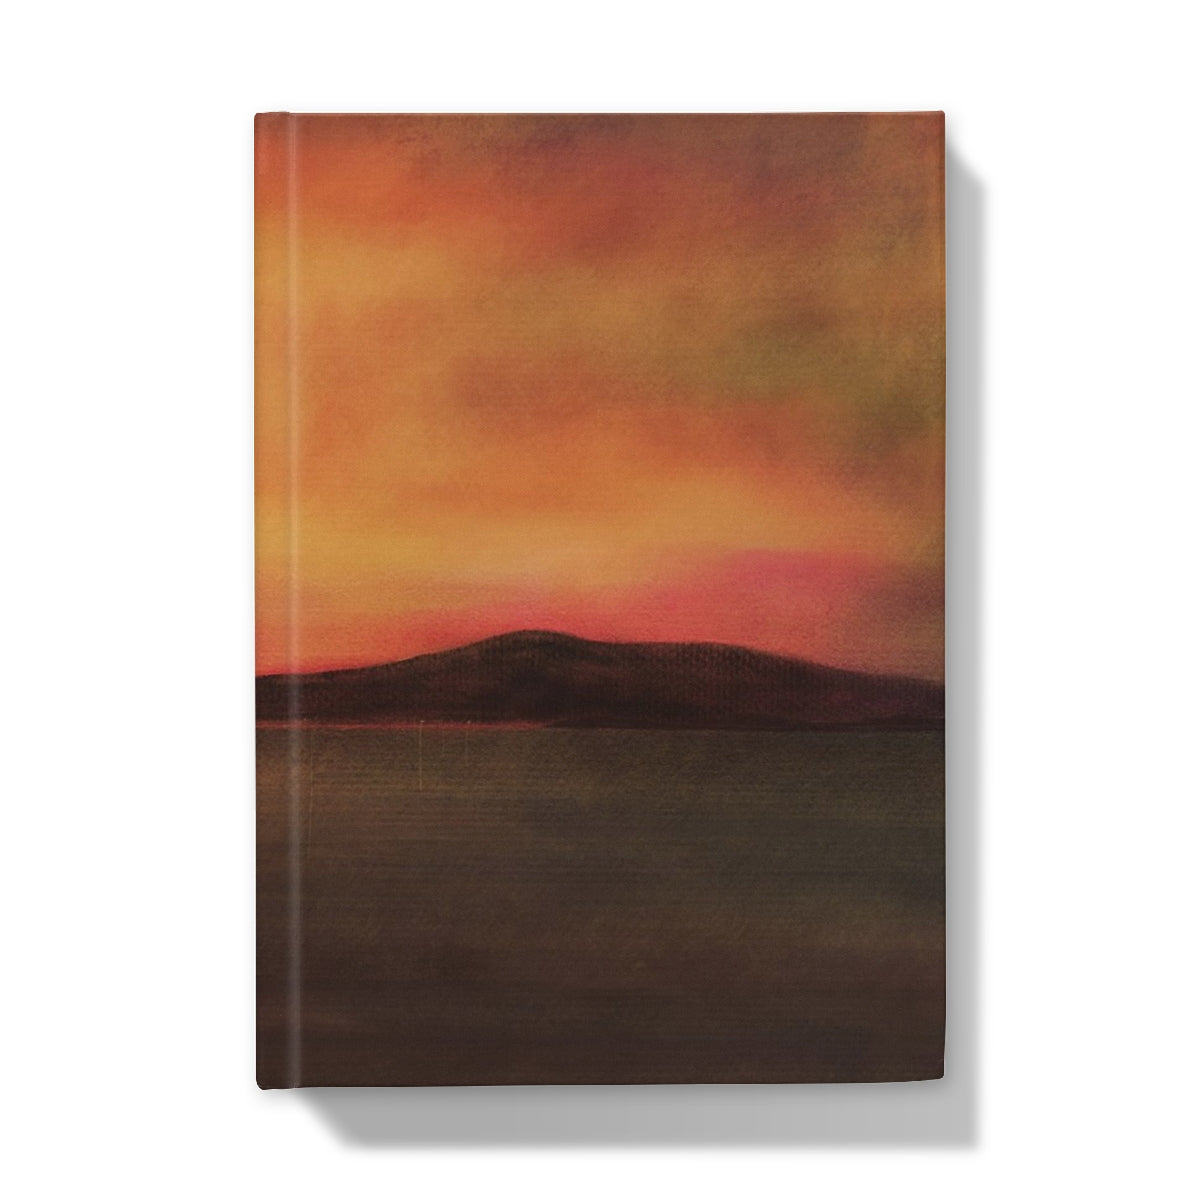 Harris Sunset Art Gifts Hardback Journal-Journals & Notebooks-Hebridean Islands Art Gallery-A5-Plain-Paintings, Prints, Homeware, Art Gifts From Scotland By Scottish Artist Kevin Hunter